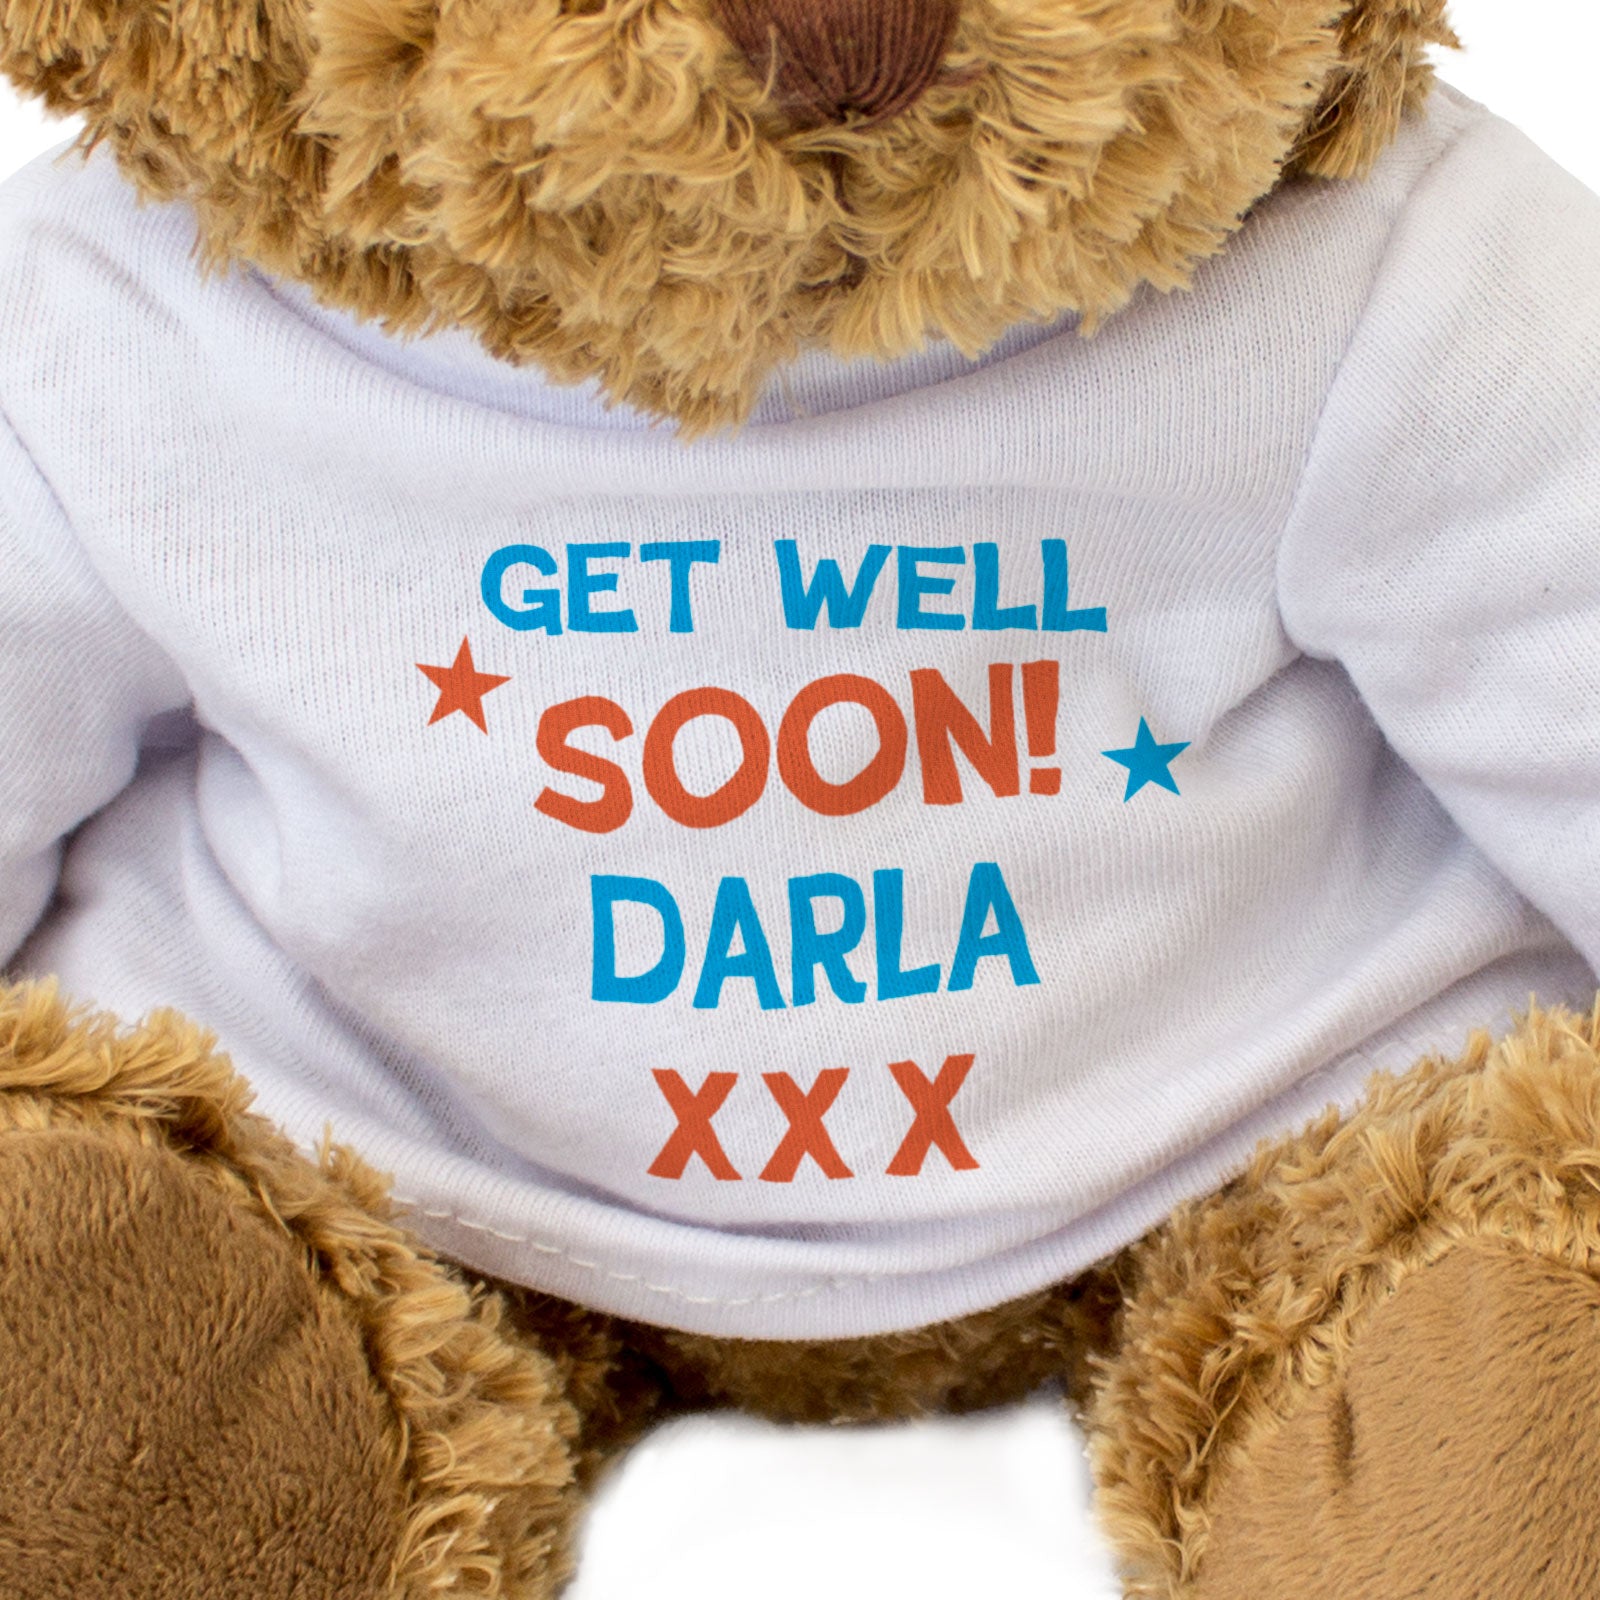 Get Well Soon Darla - Teddy Bear